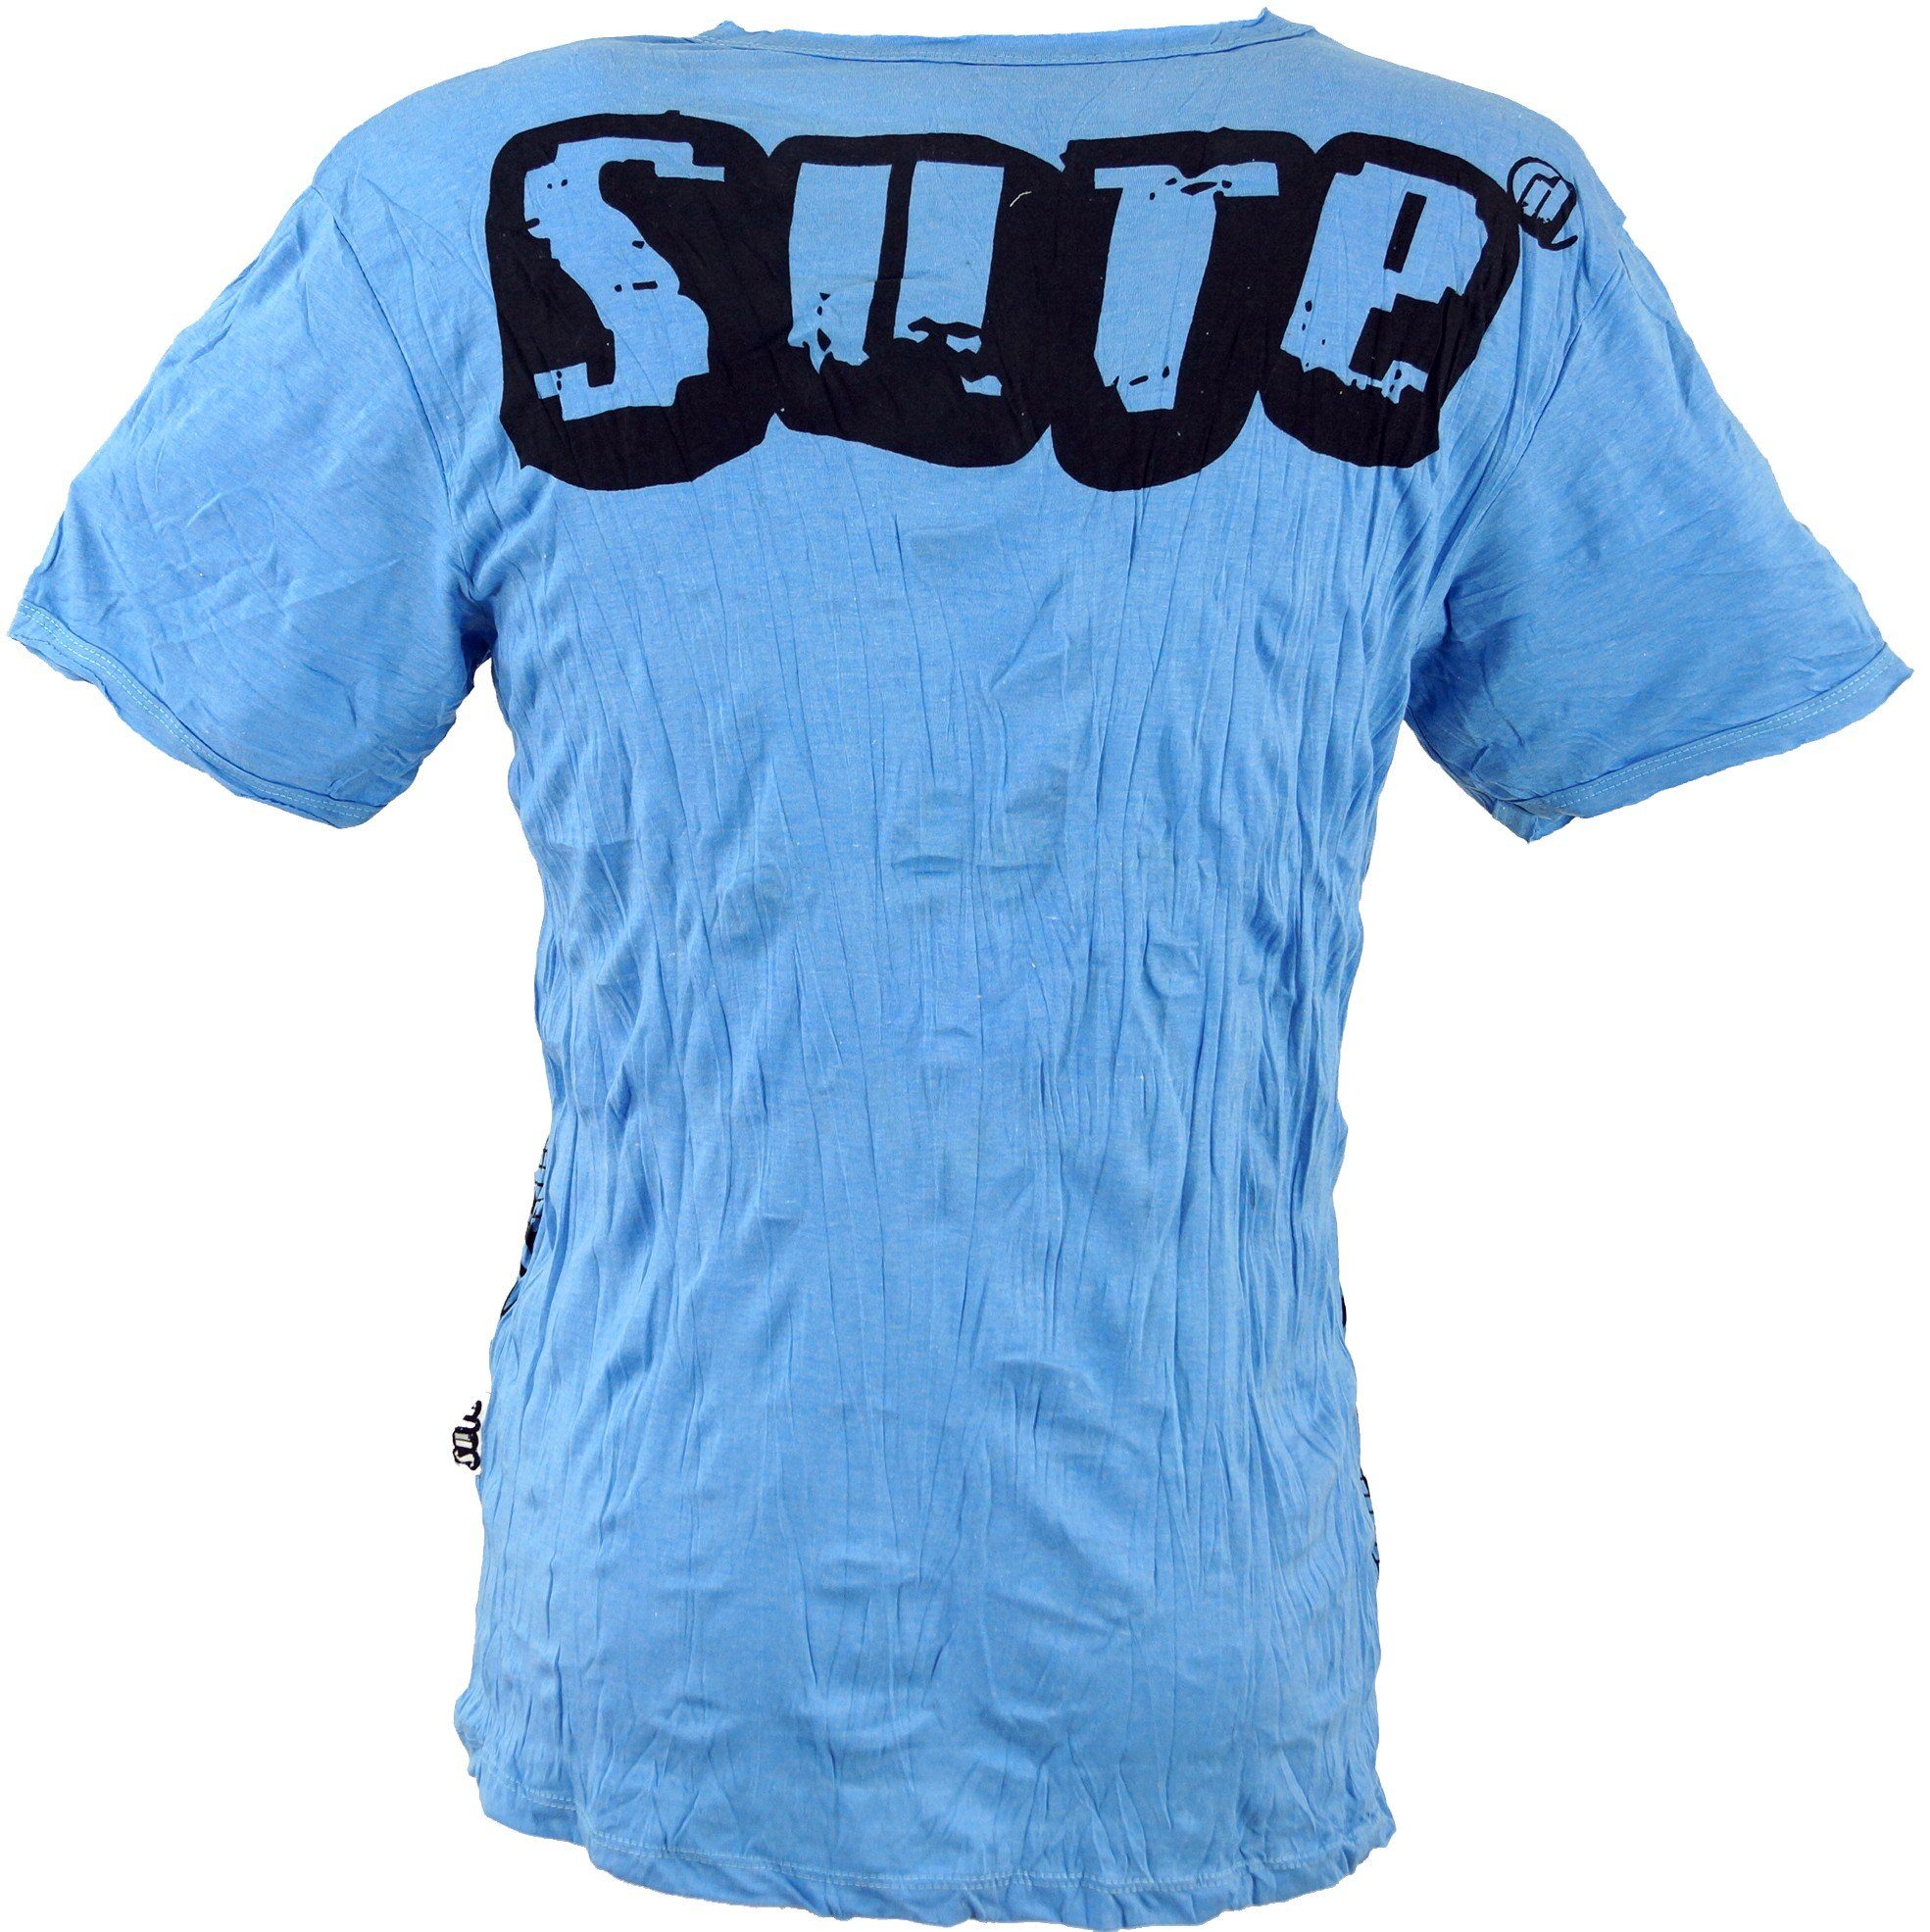 Guru-Shop T-Shirt Sure Style, T-Shirt Dämon Bekleidung Festival, hellblau alternative - Goa